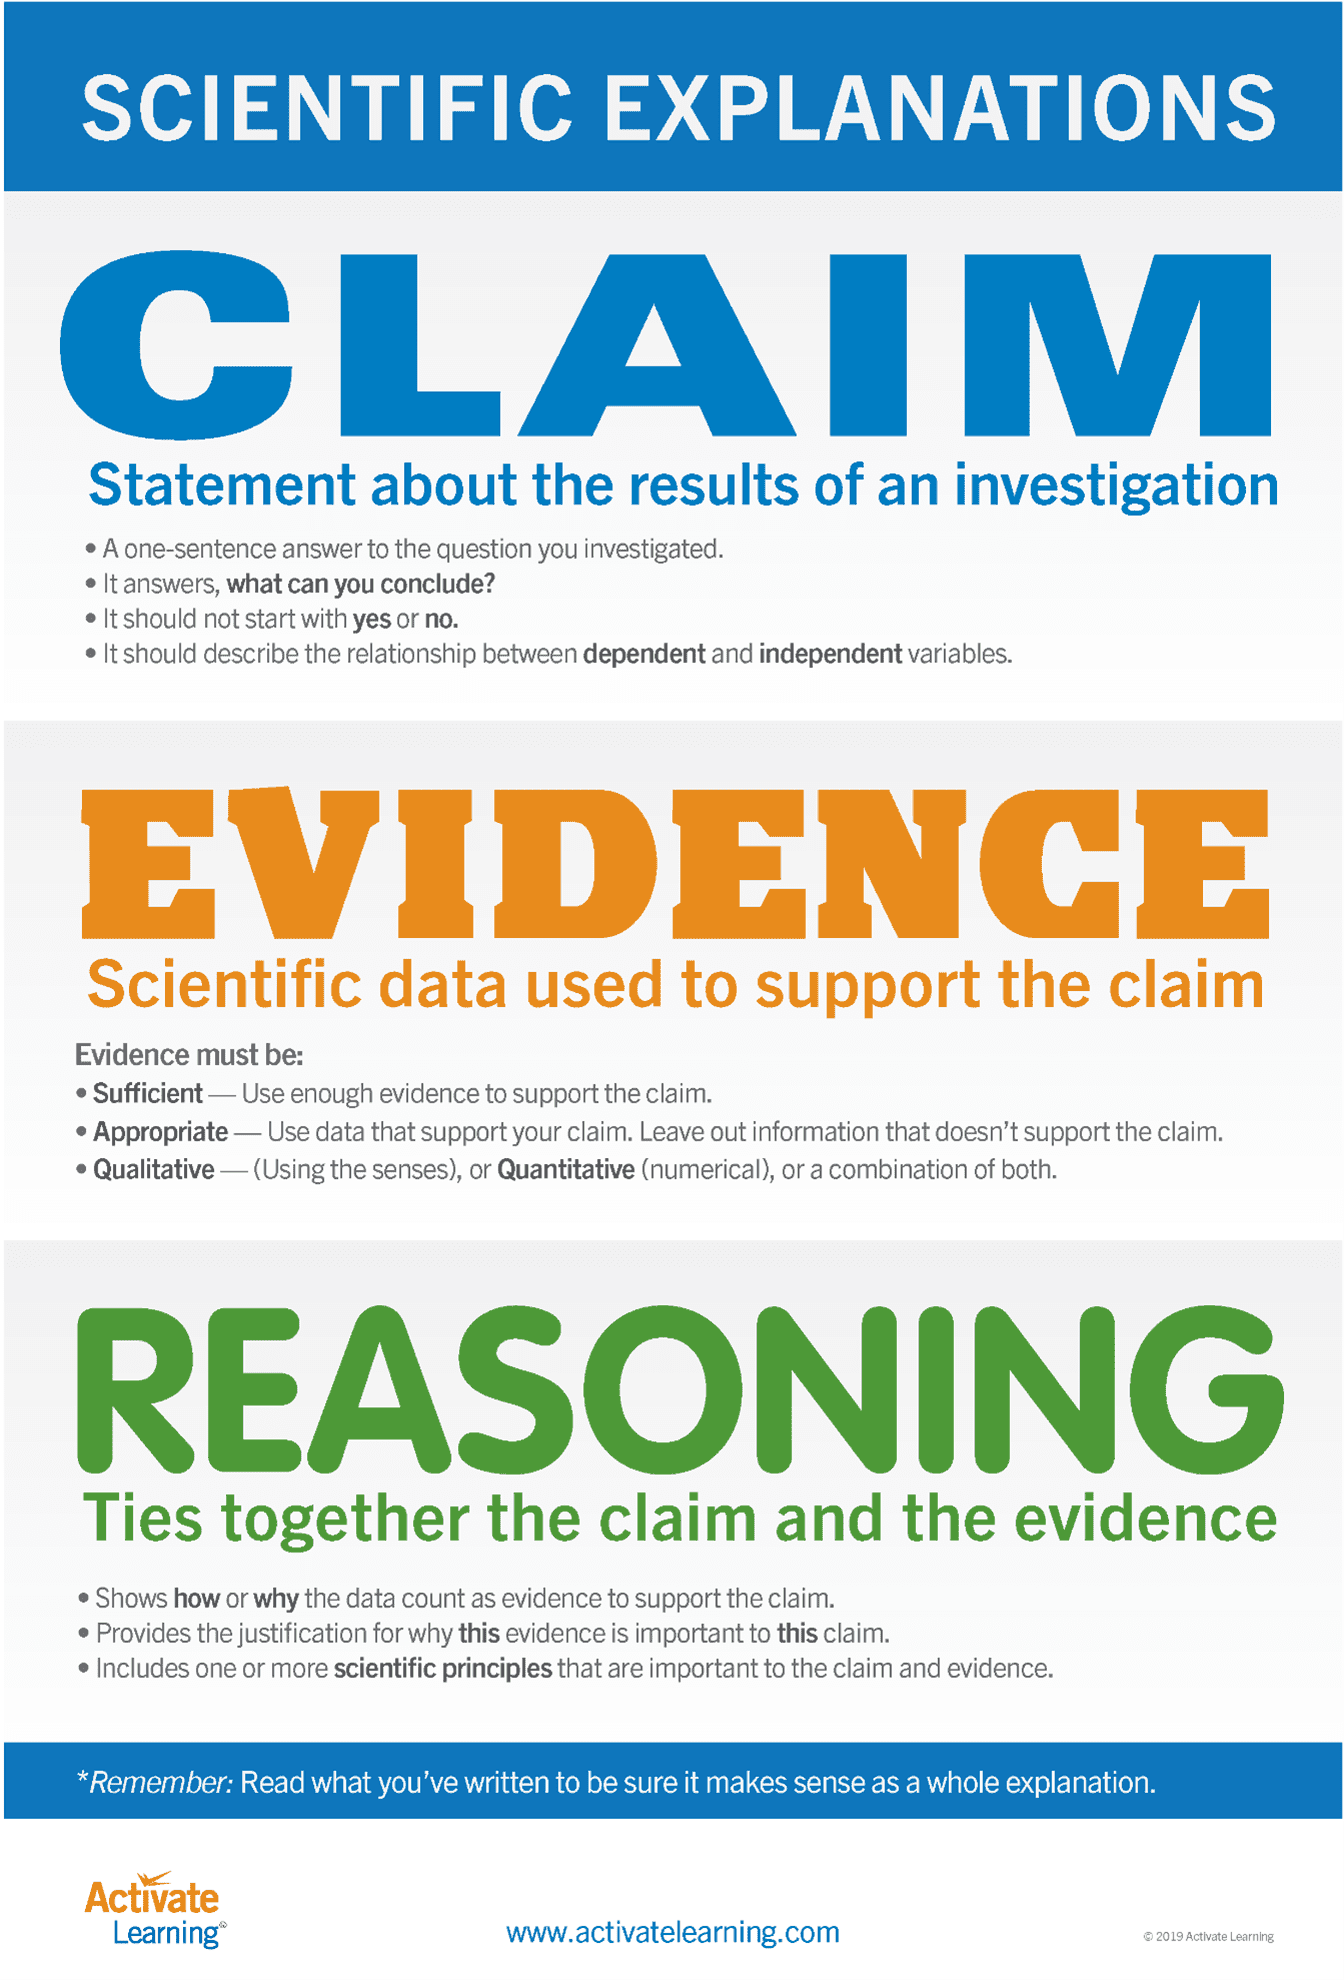 claim-evidence-reasoning-framework-activate-learning